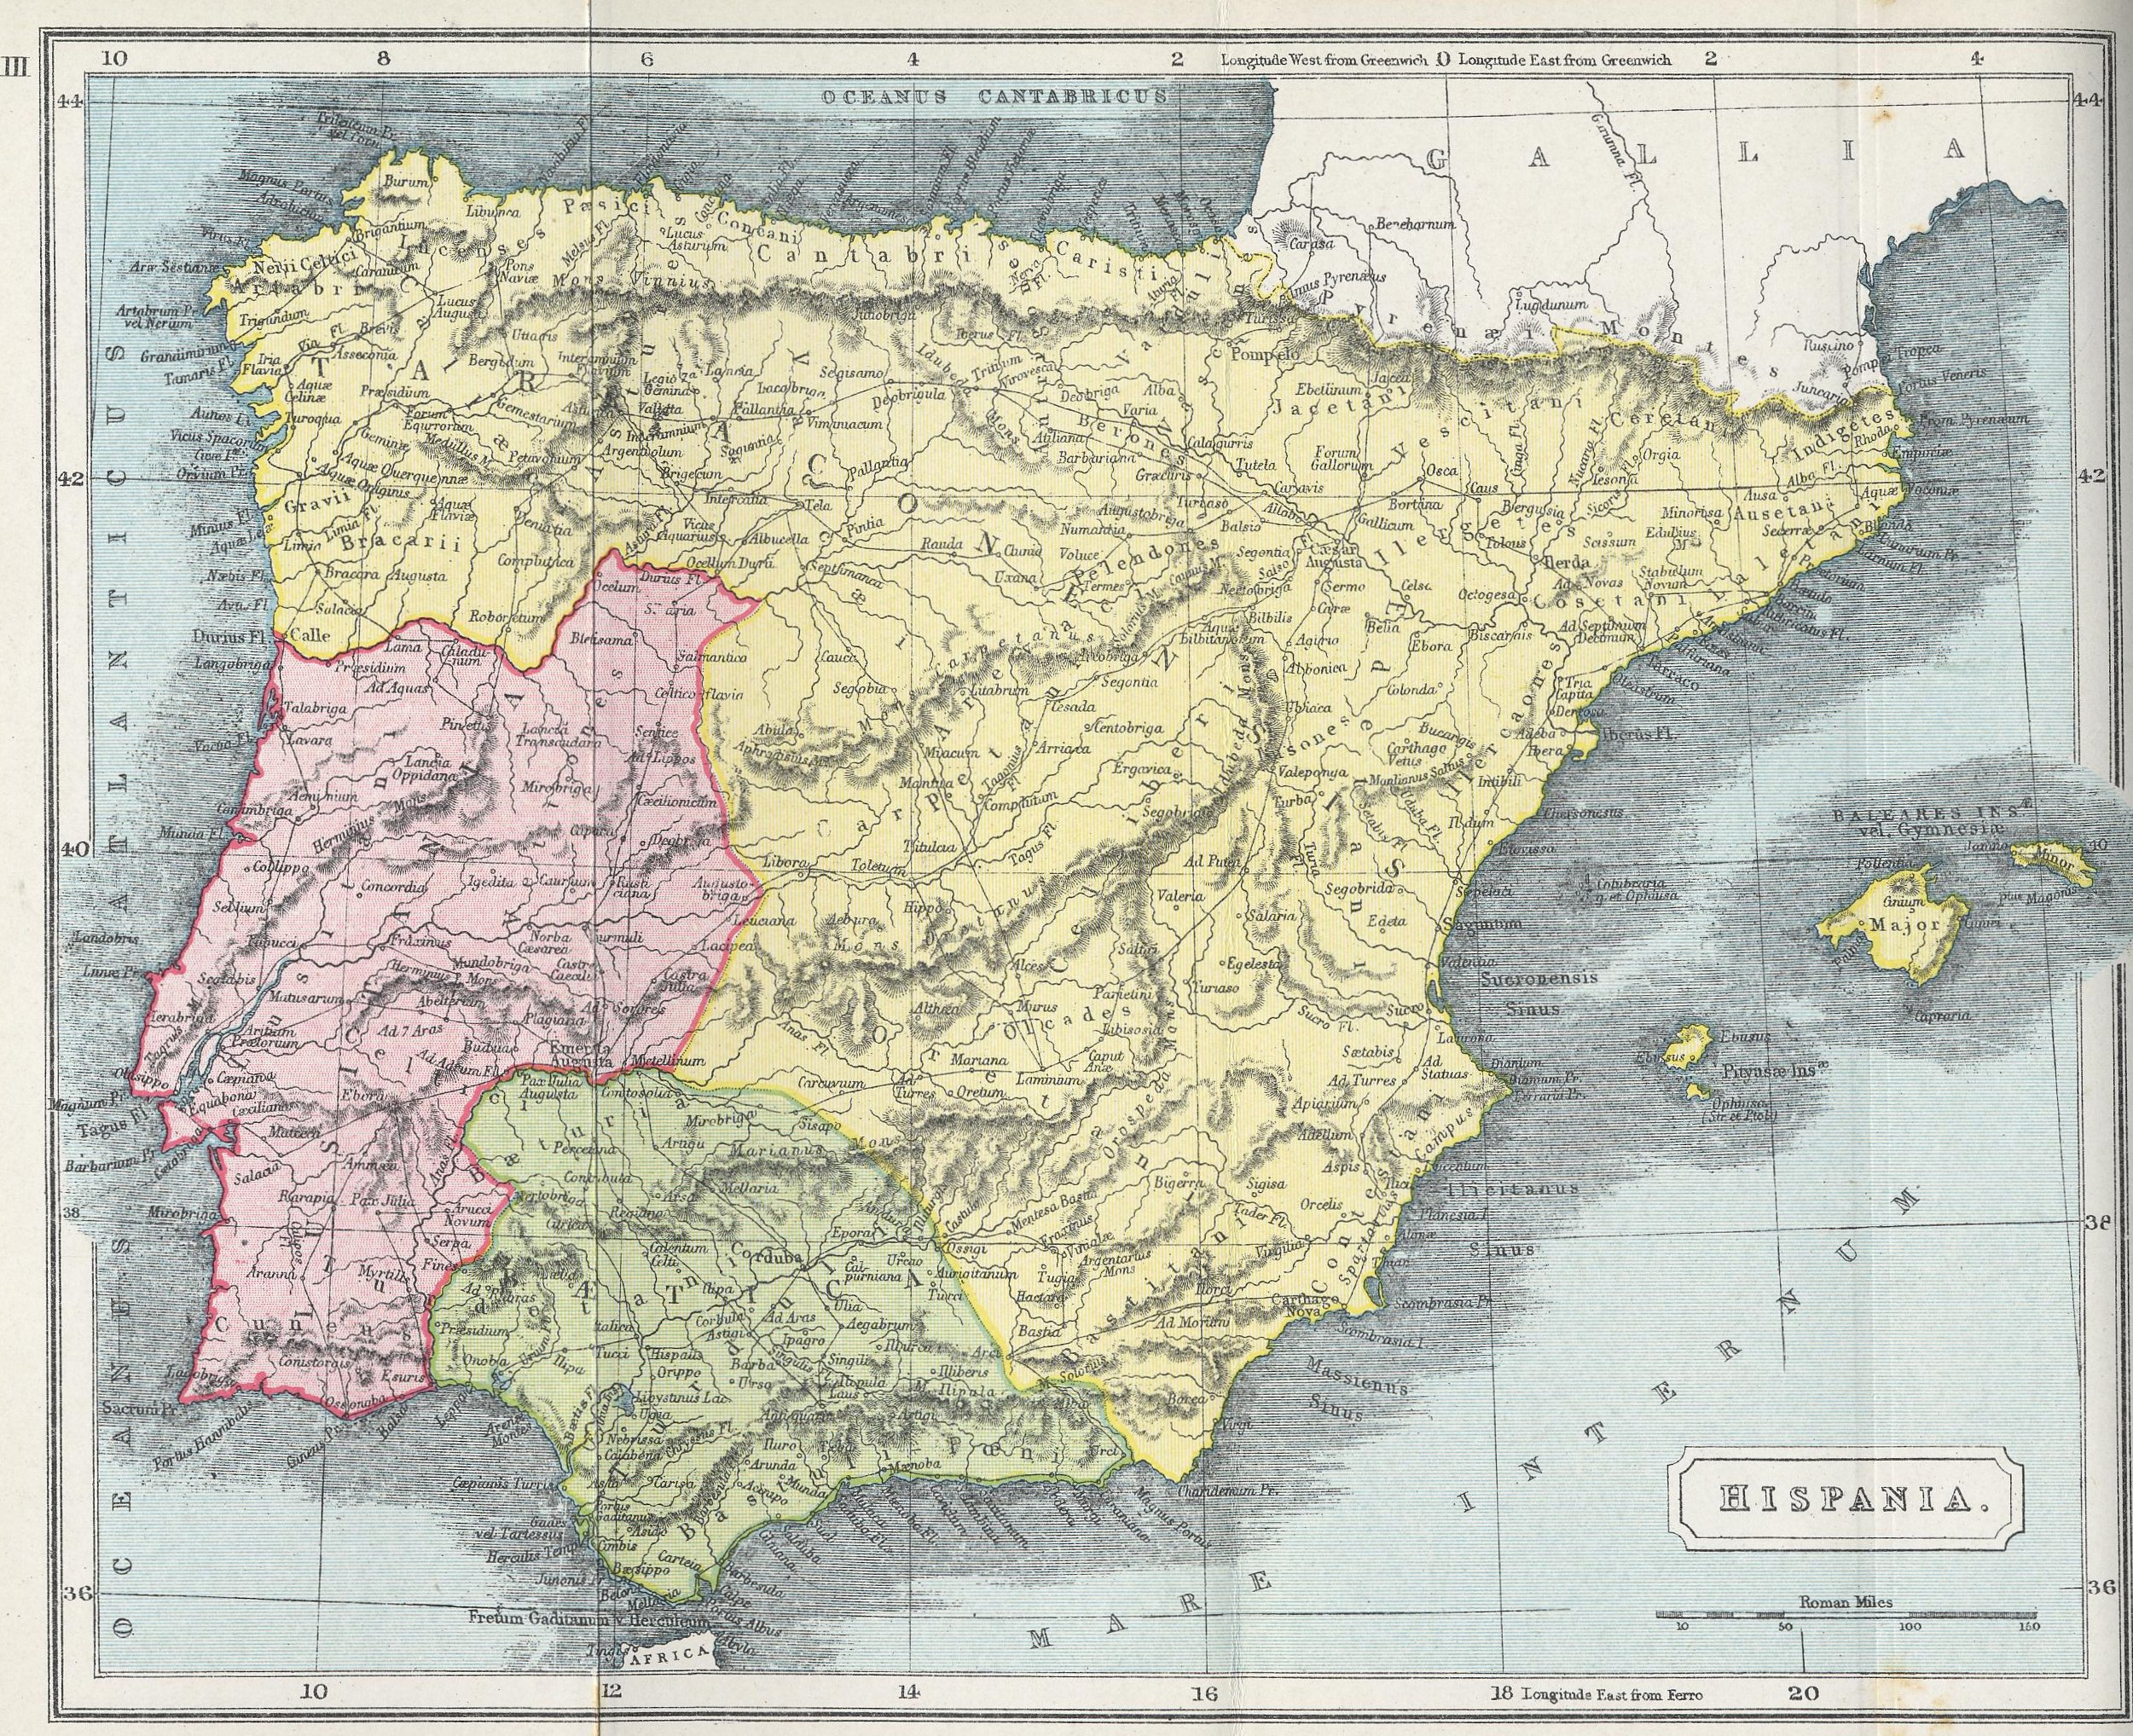 Map of Iberia 70 BC - AD 180